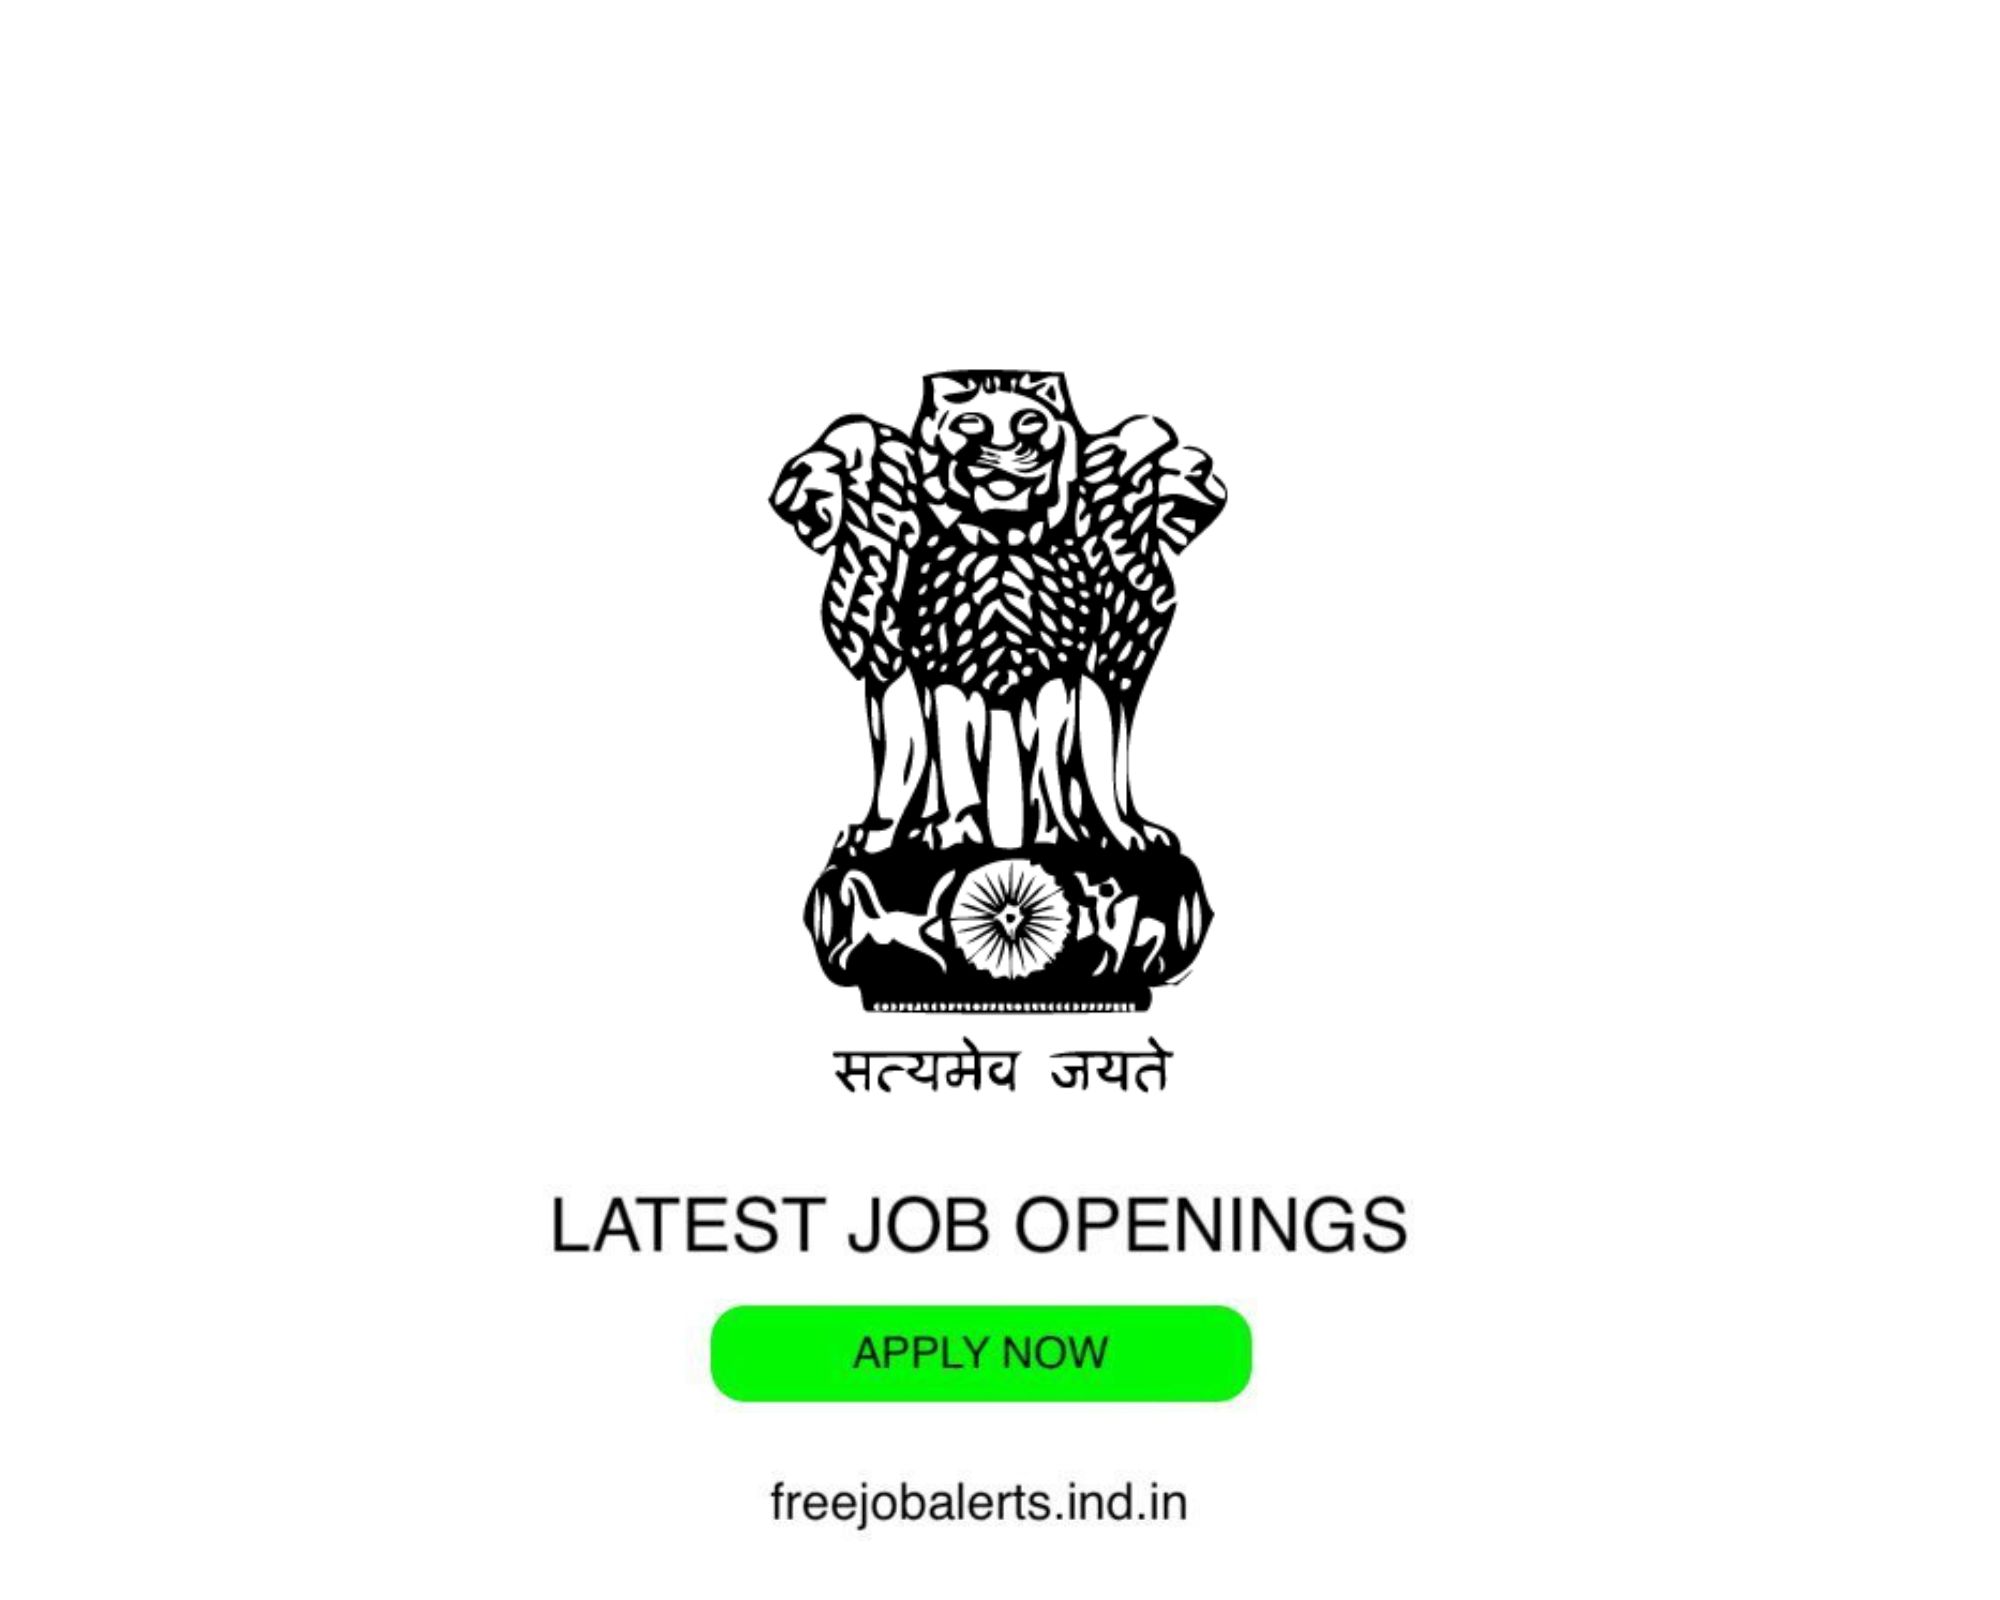 Rajasthan High Court - Latest Govt job openings - Free job alerts, Indian Govt Jobs